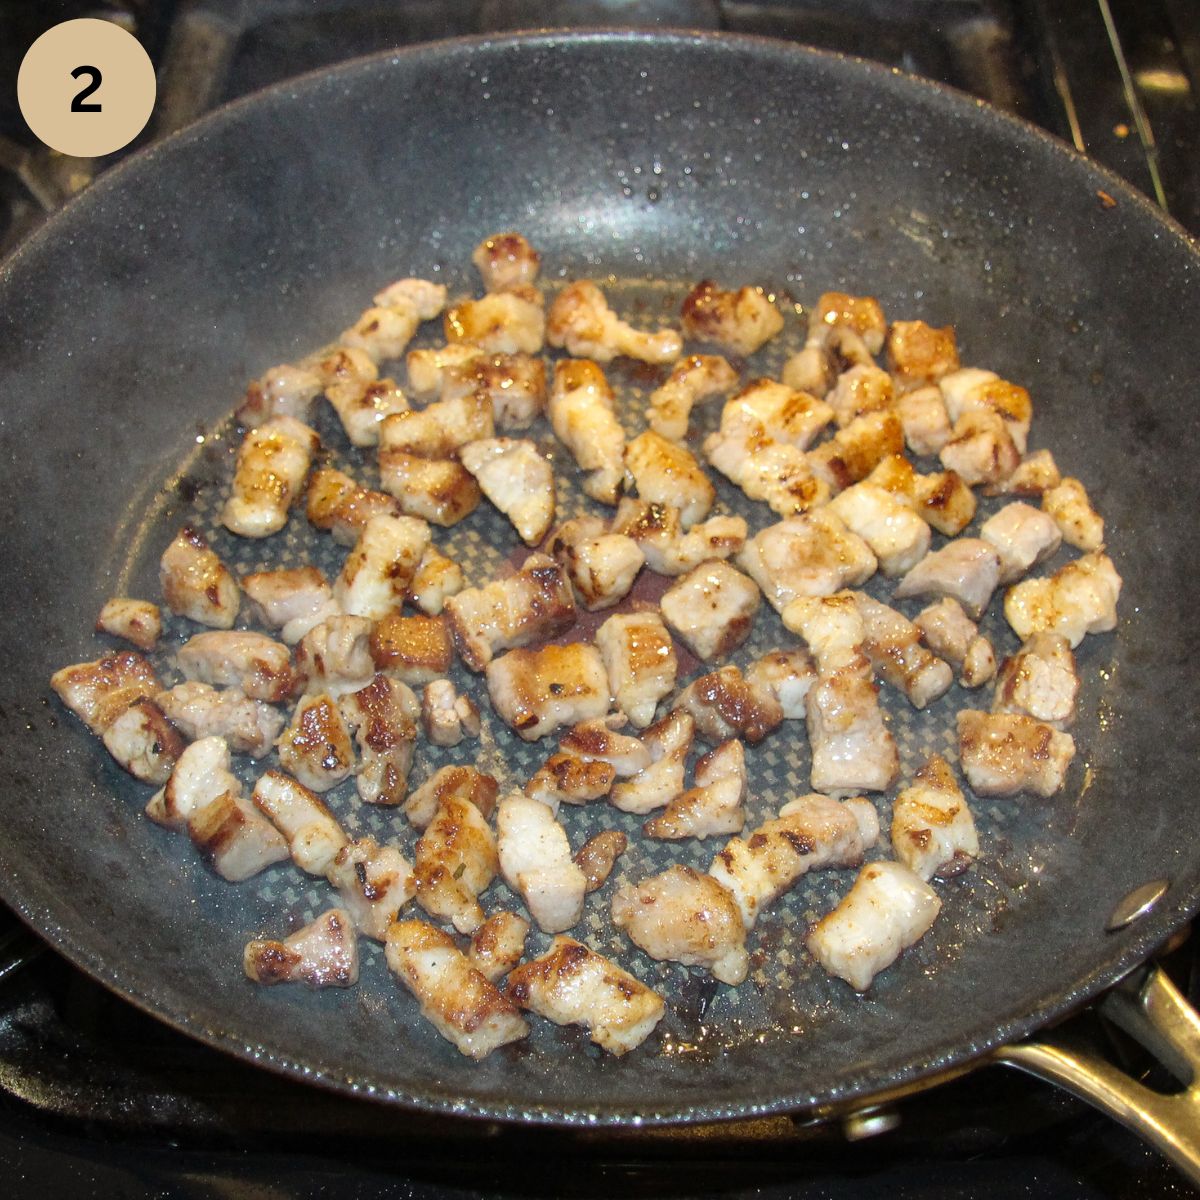 frying pork pieces in a frying pan.